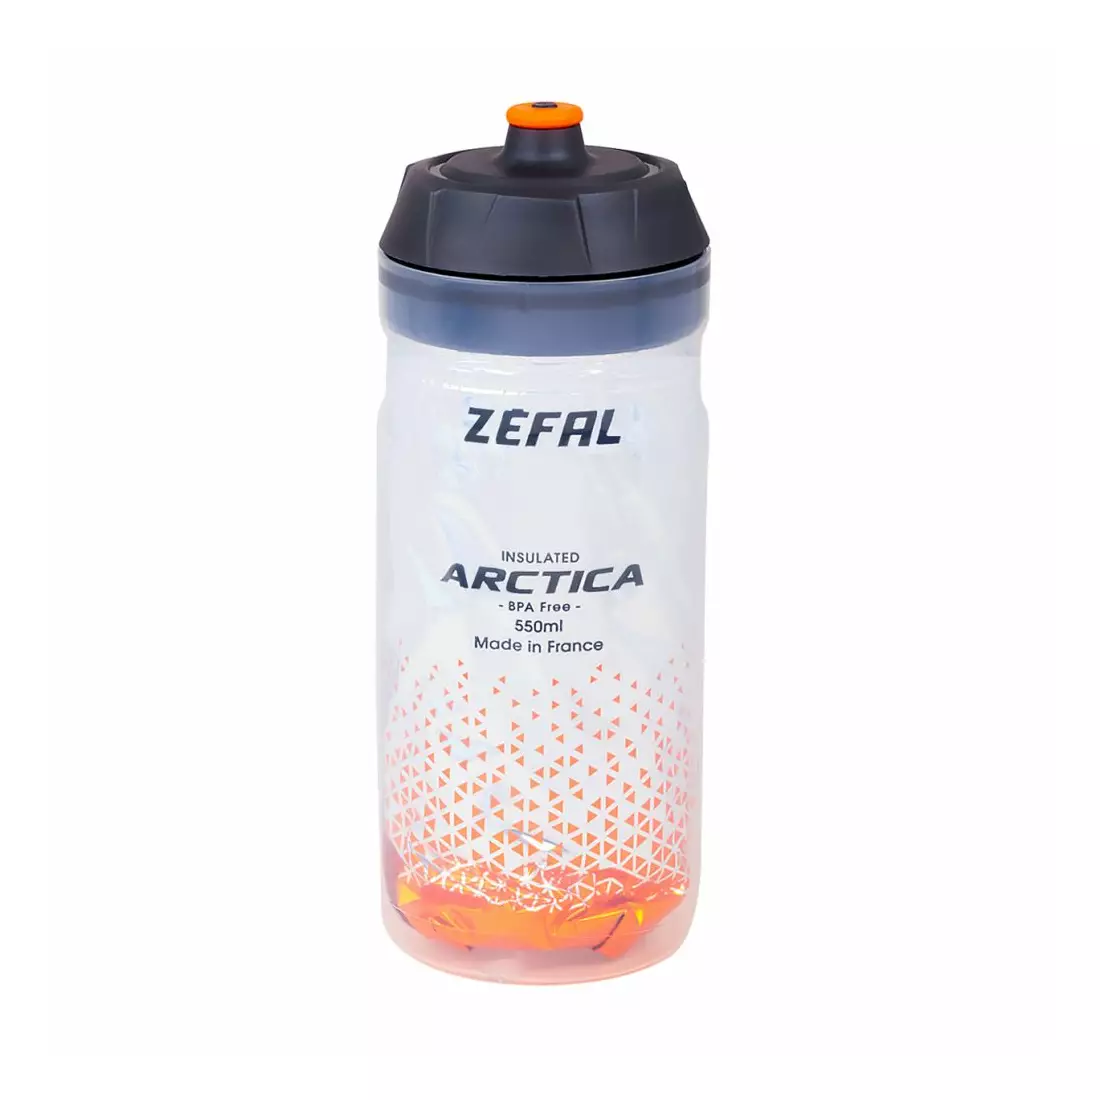 ZEFAL ARCTICA 55 Thermal bicycle bottle, silver-orange, 550ml